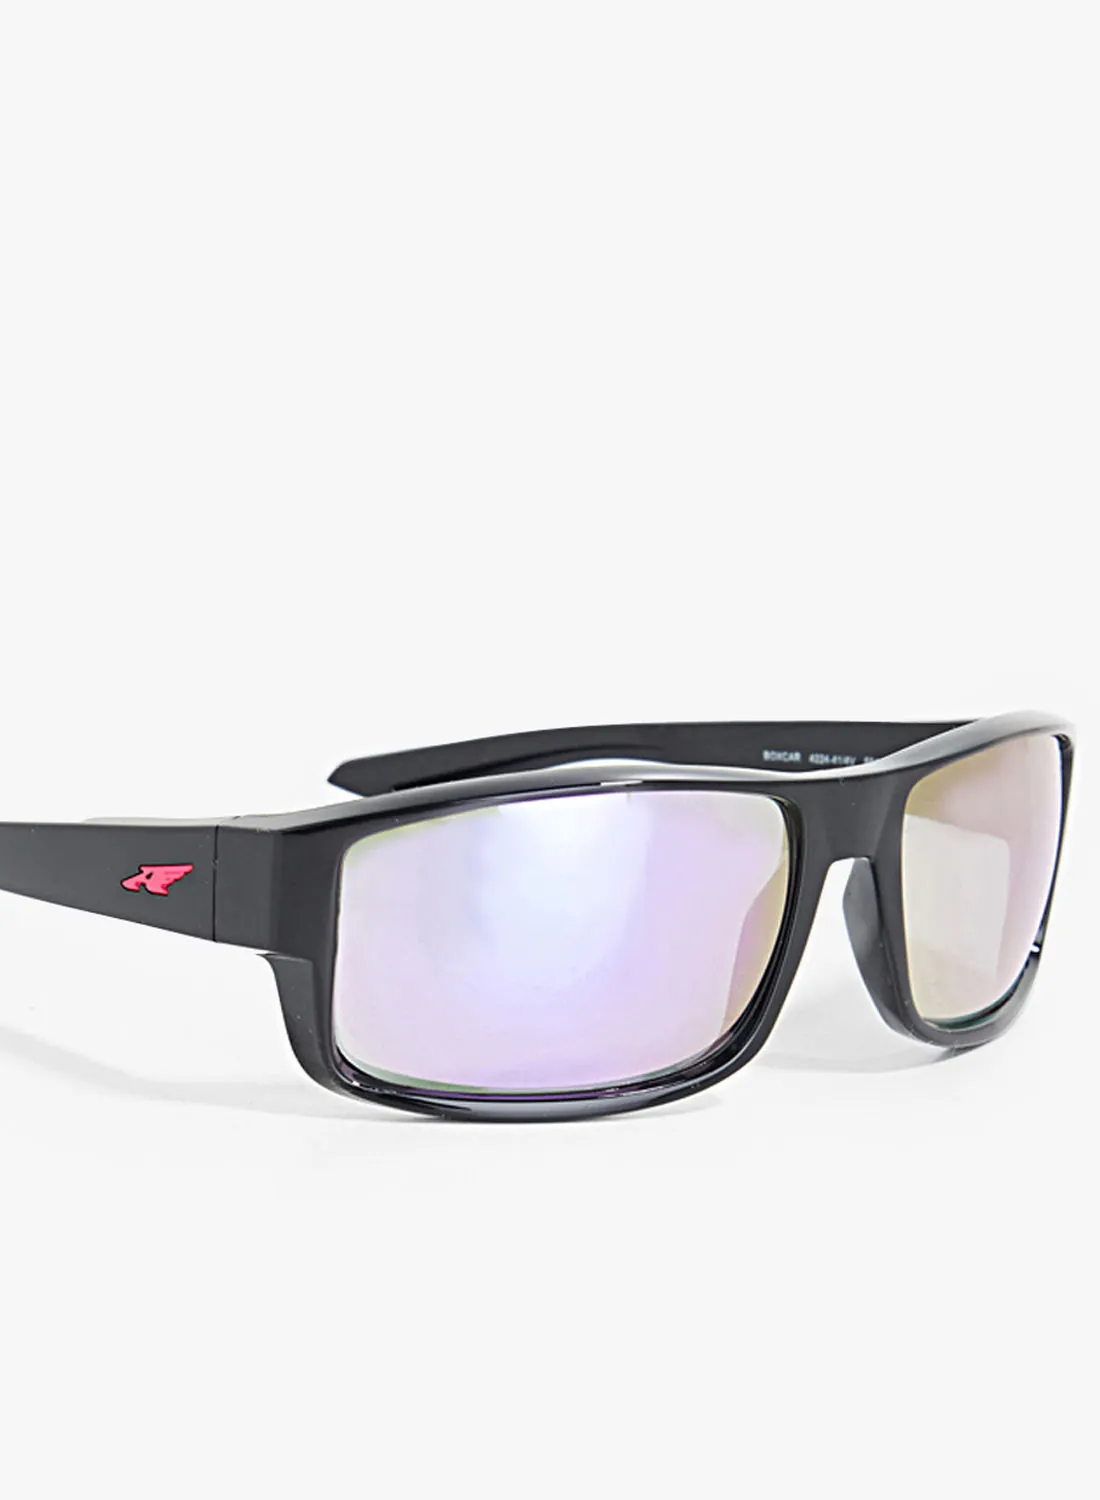 Arnette Men's Black Boxcar Mirrored Sunglasses